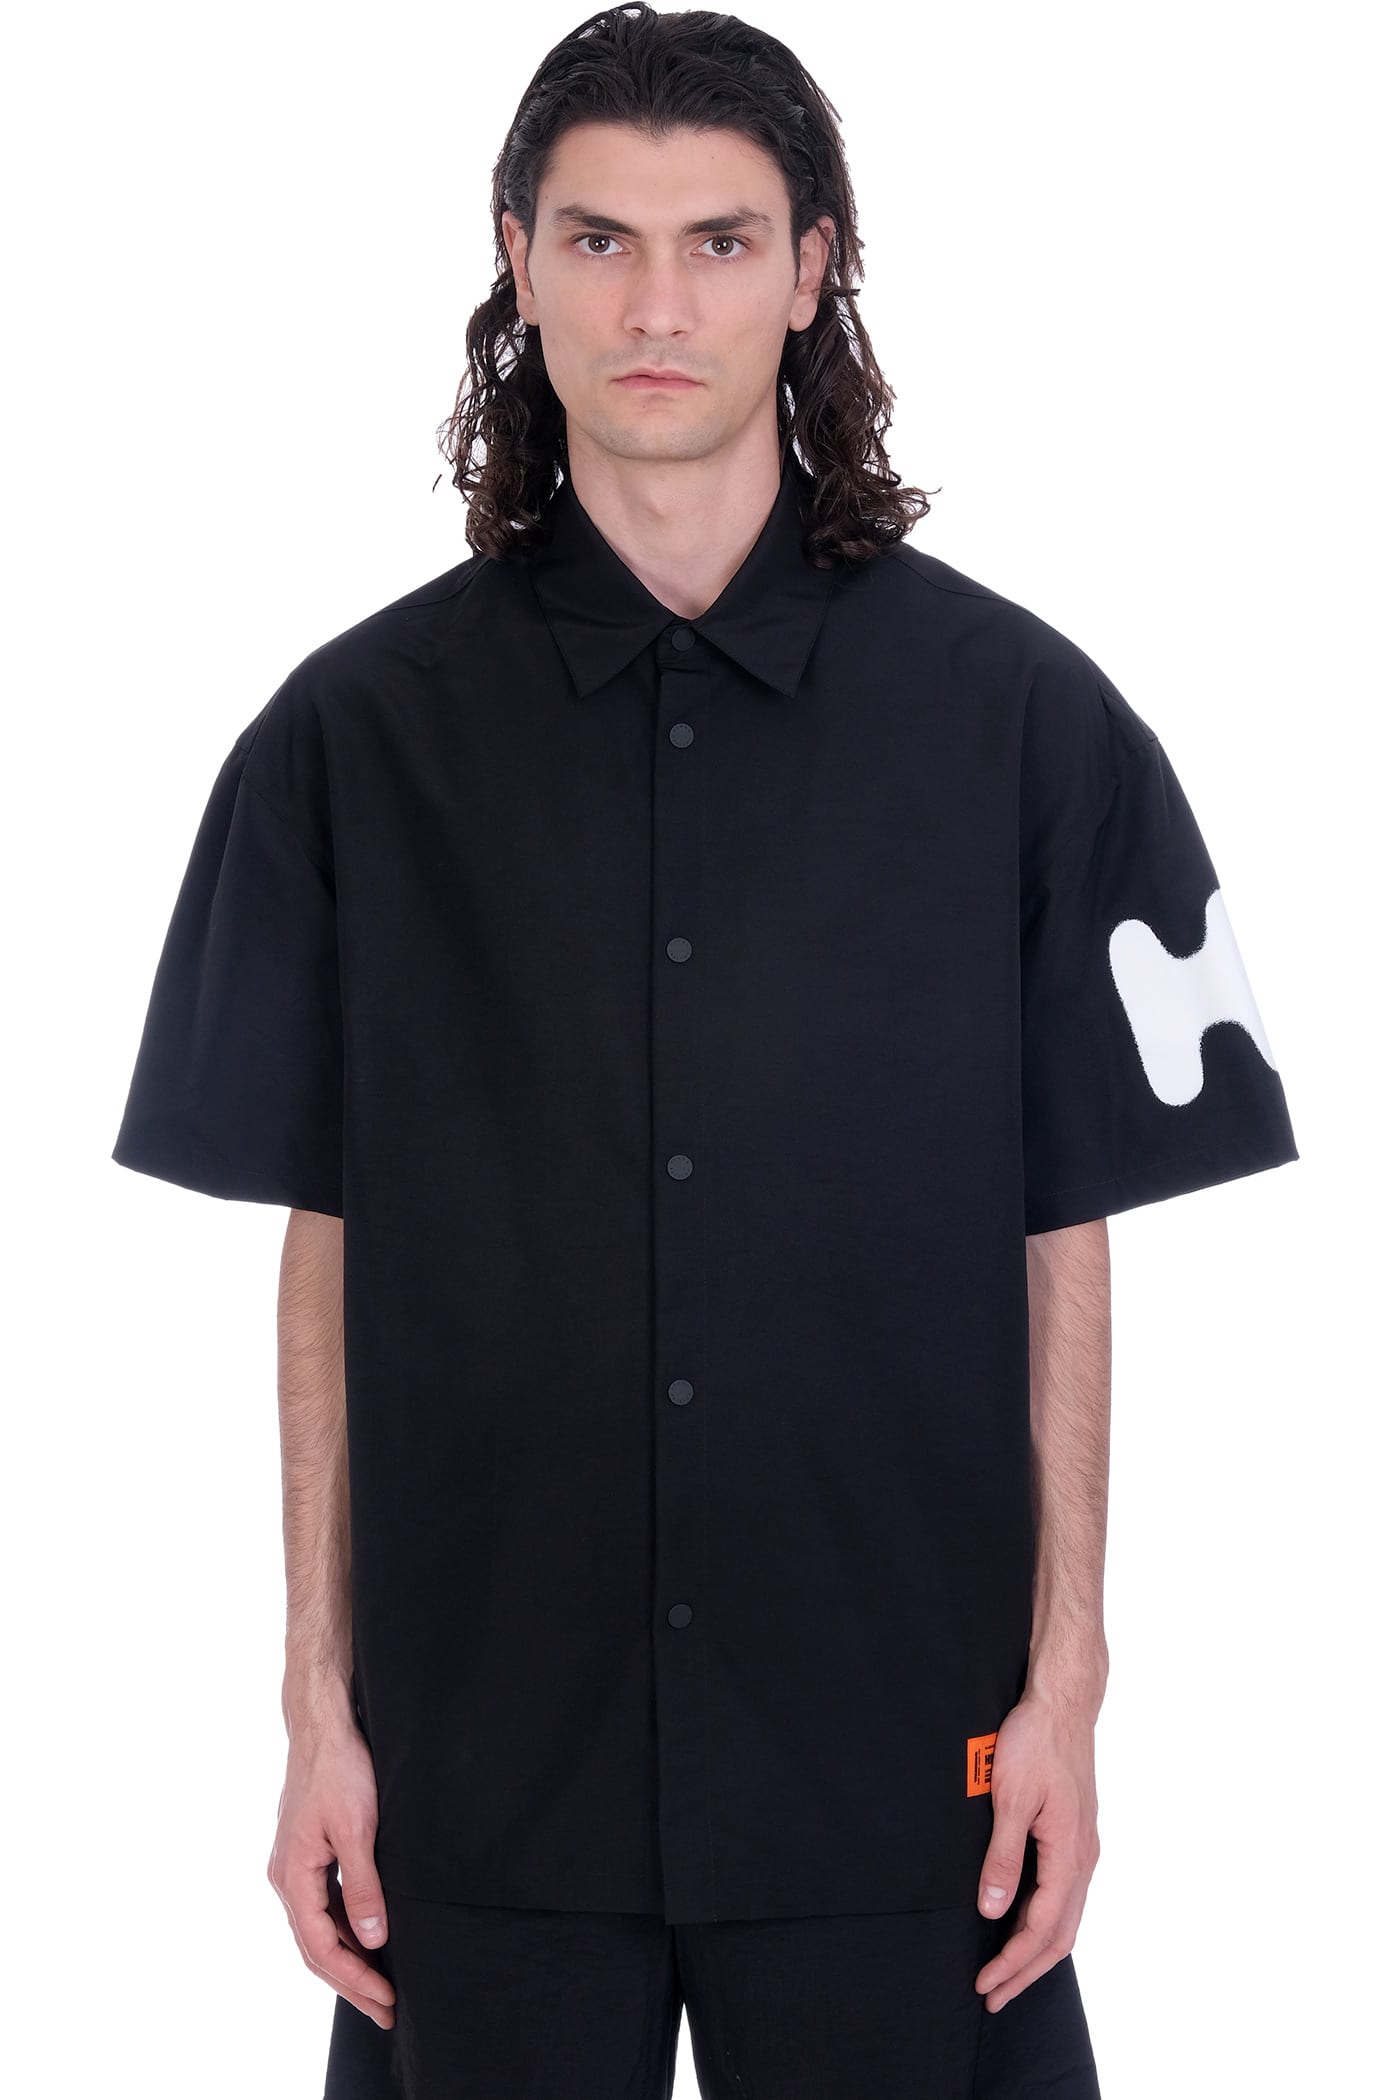 HERON PRESTON Shirt In Black Polyester